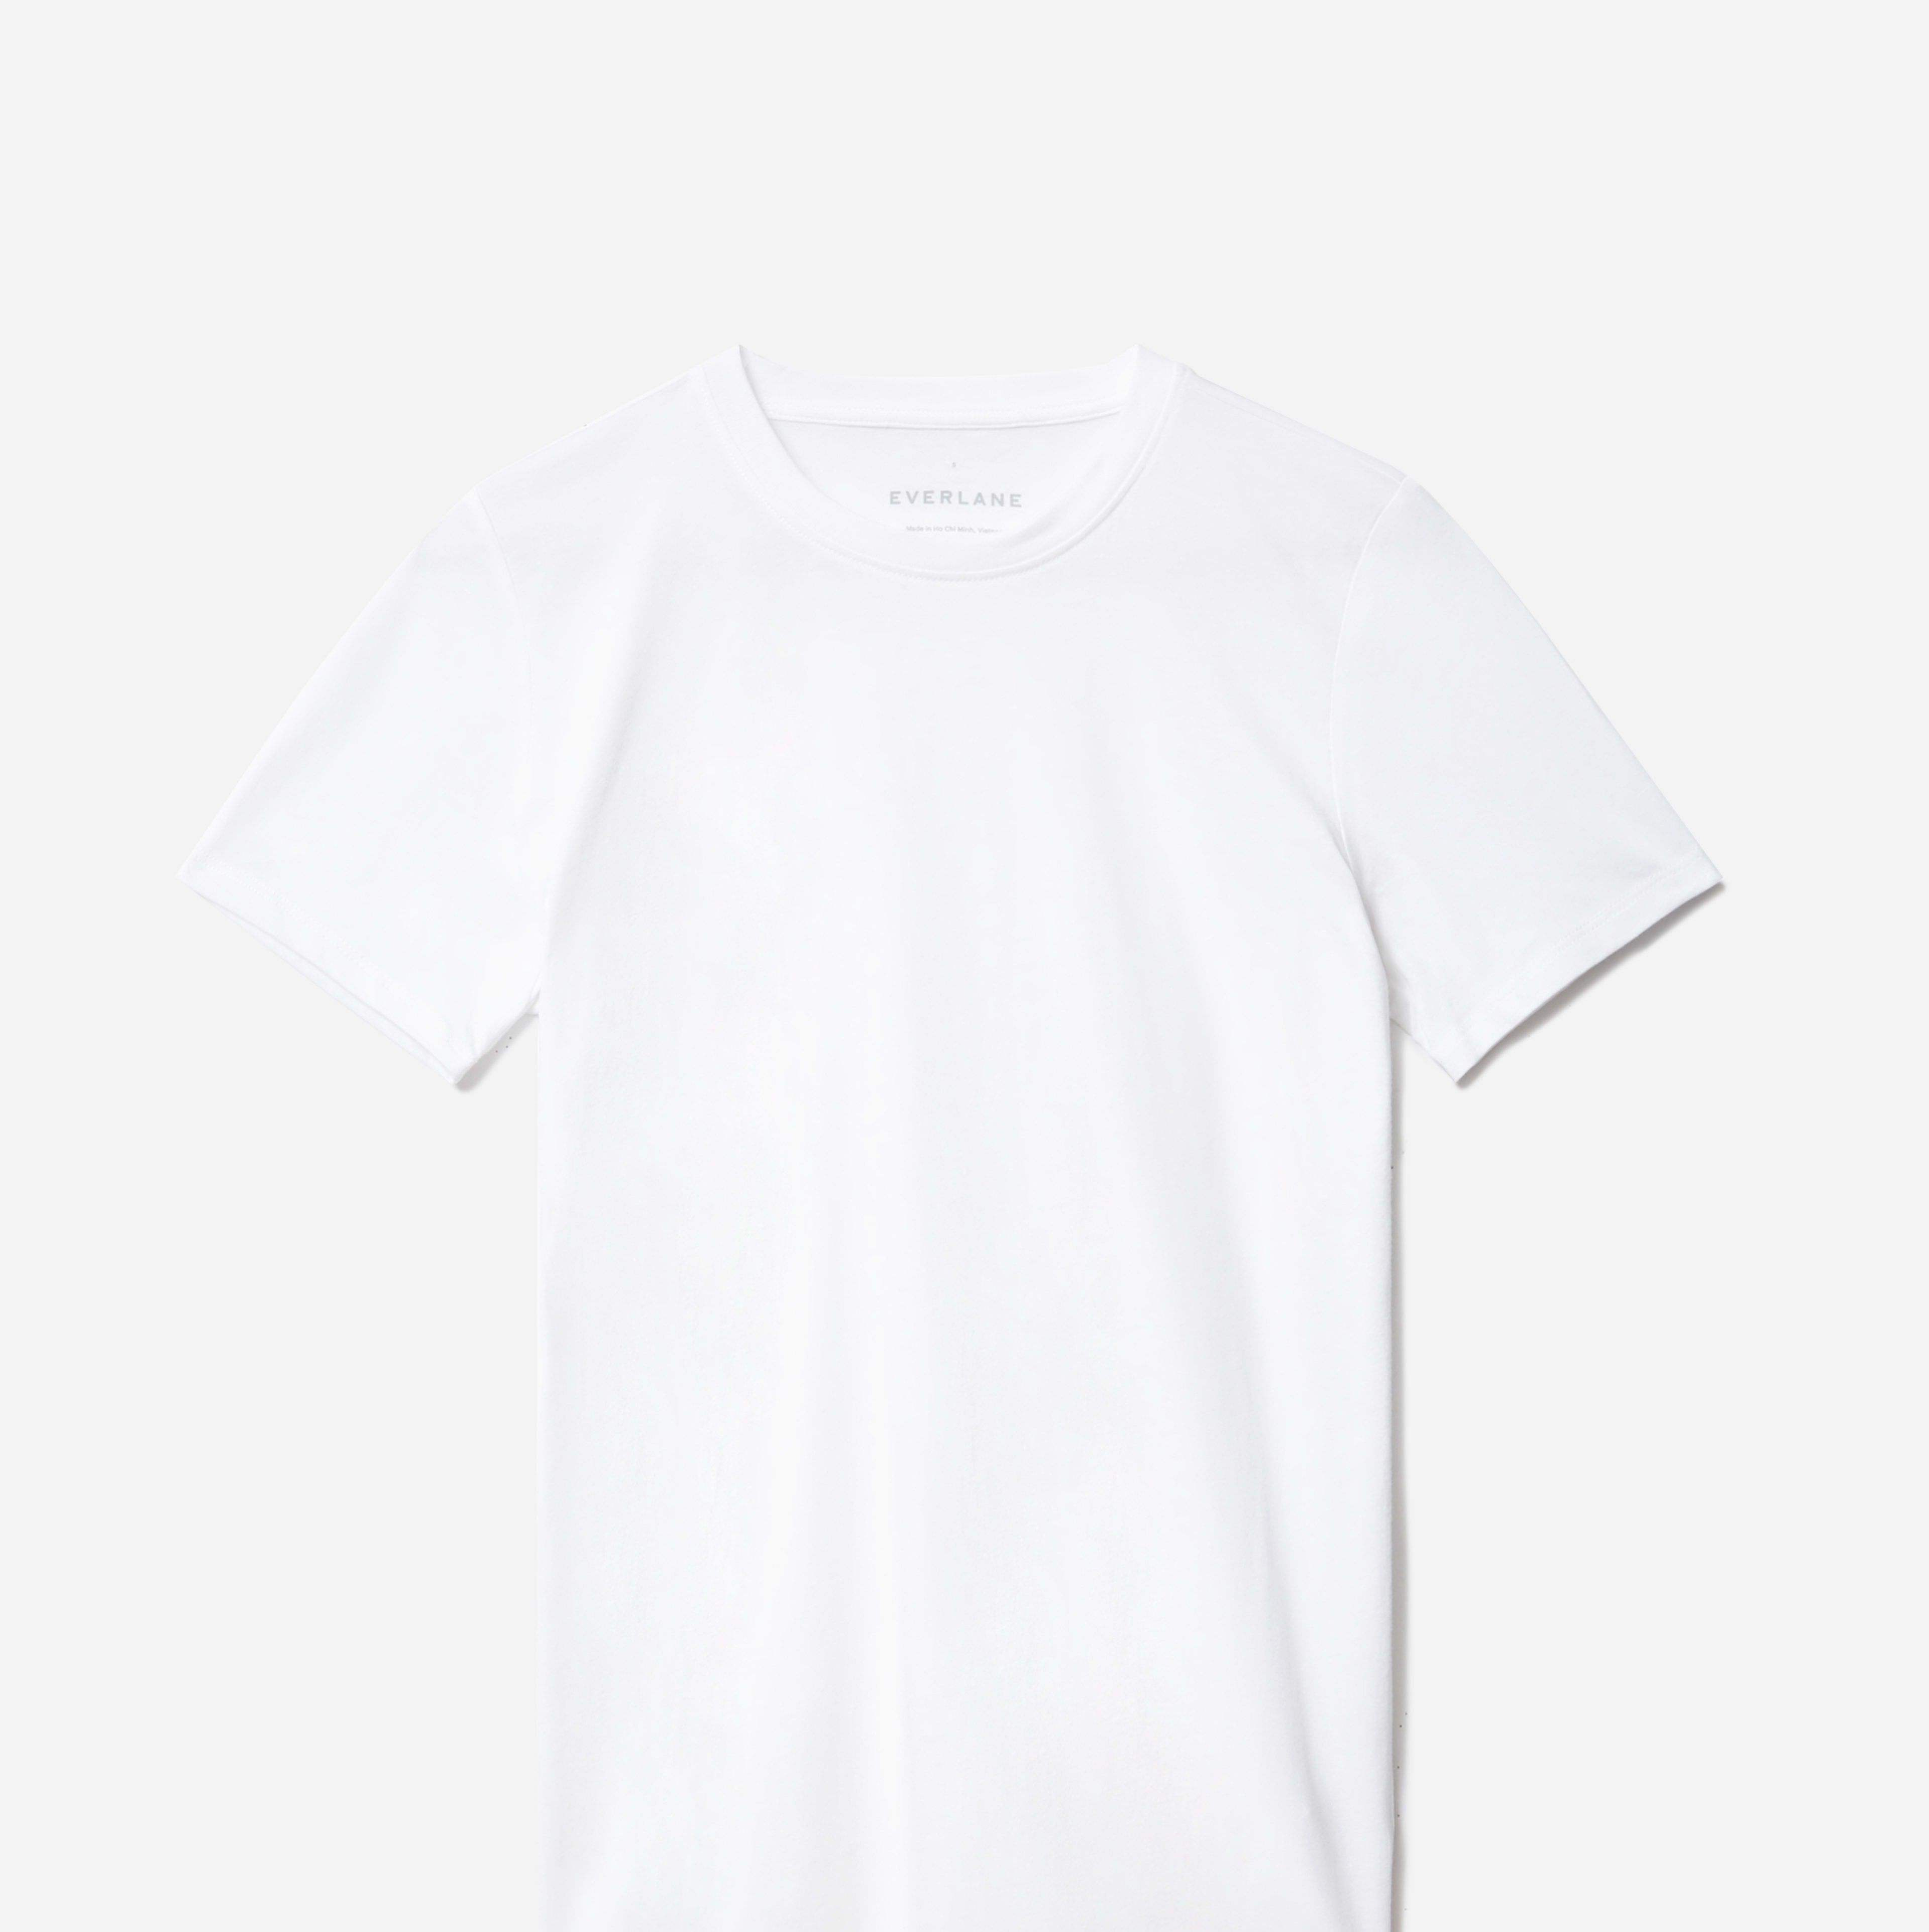 plain white t shirt women